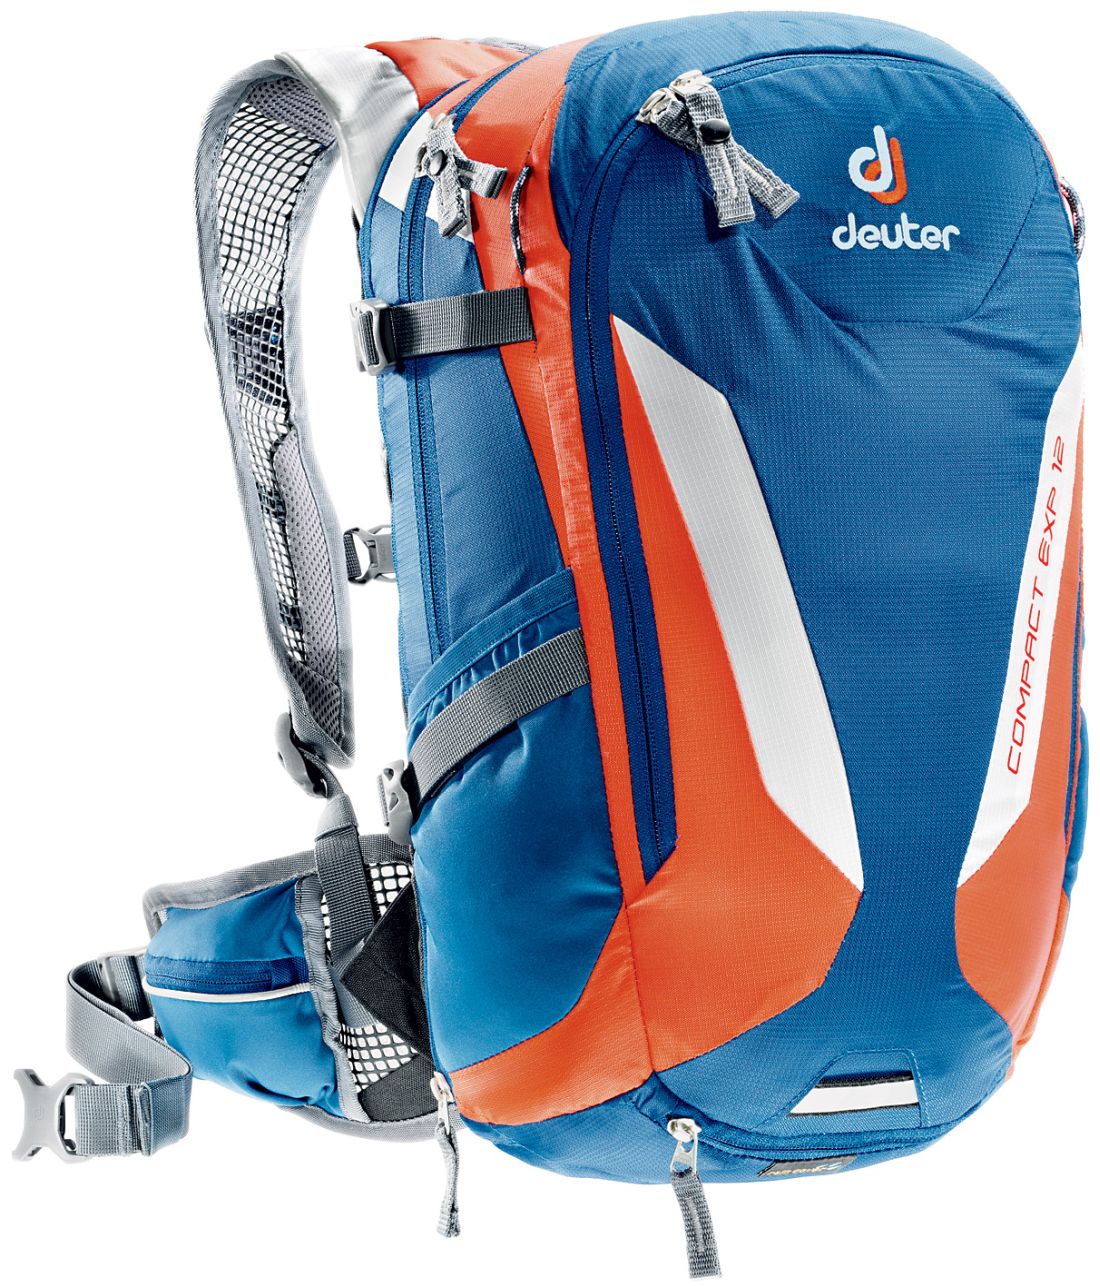 Deuter - Компактный рюкзак Compact EXP 12